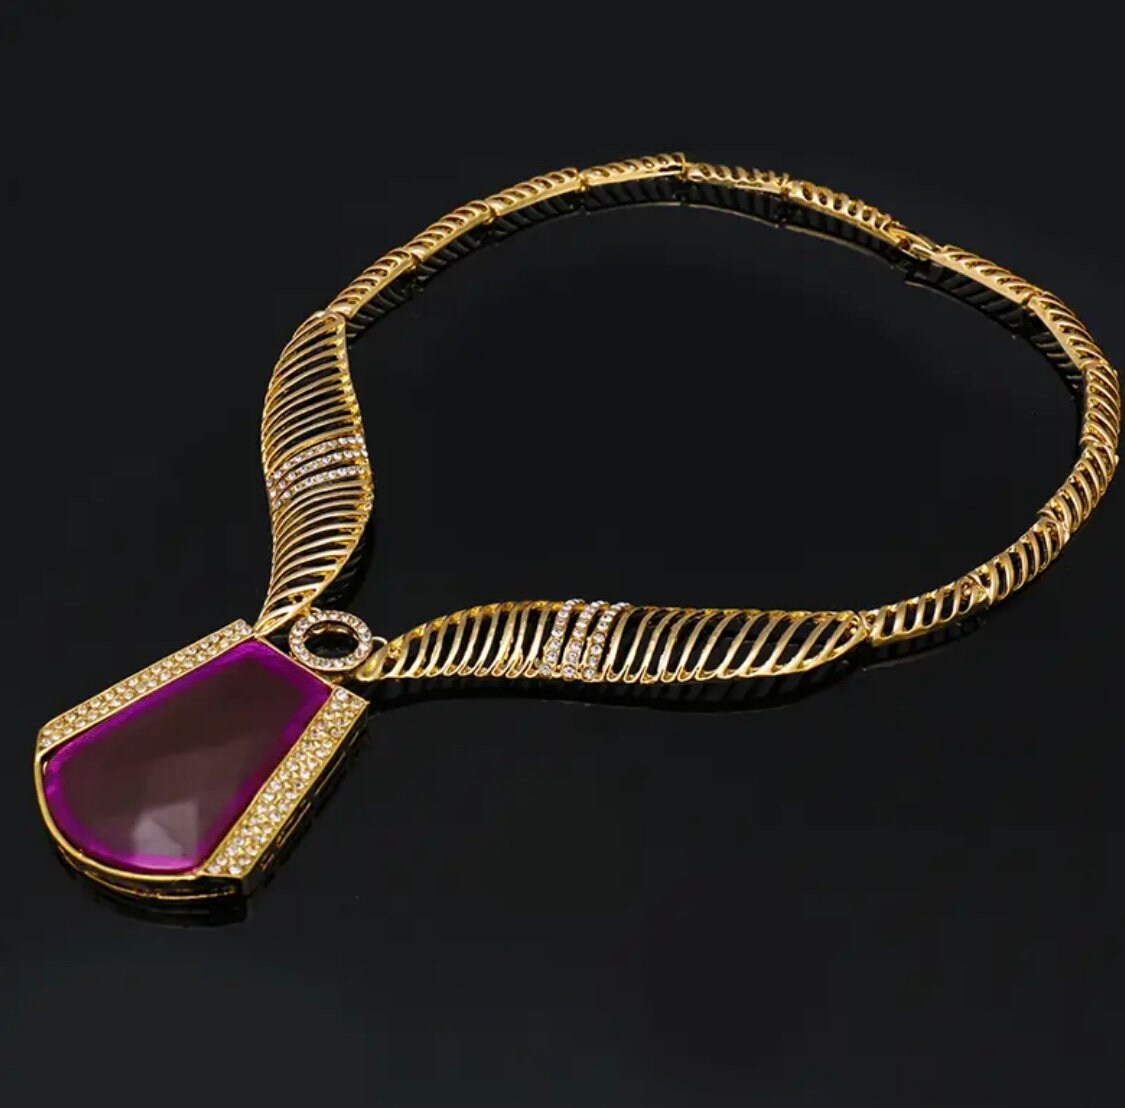 Amazing five piece gold,rhinestone set with purple emblems.